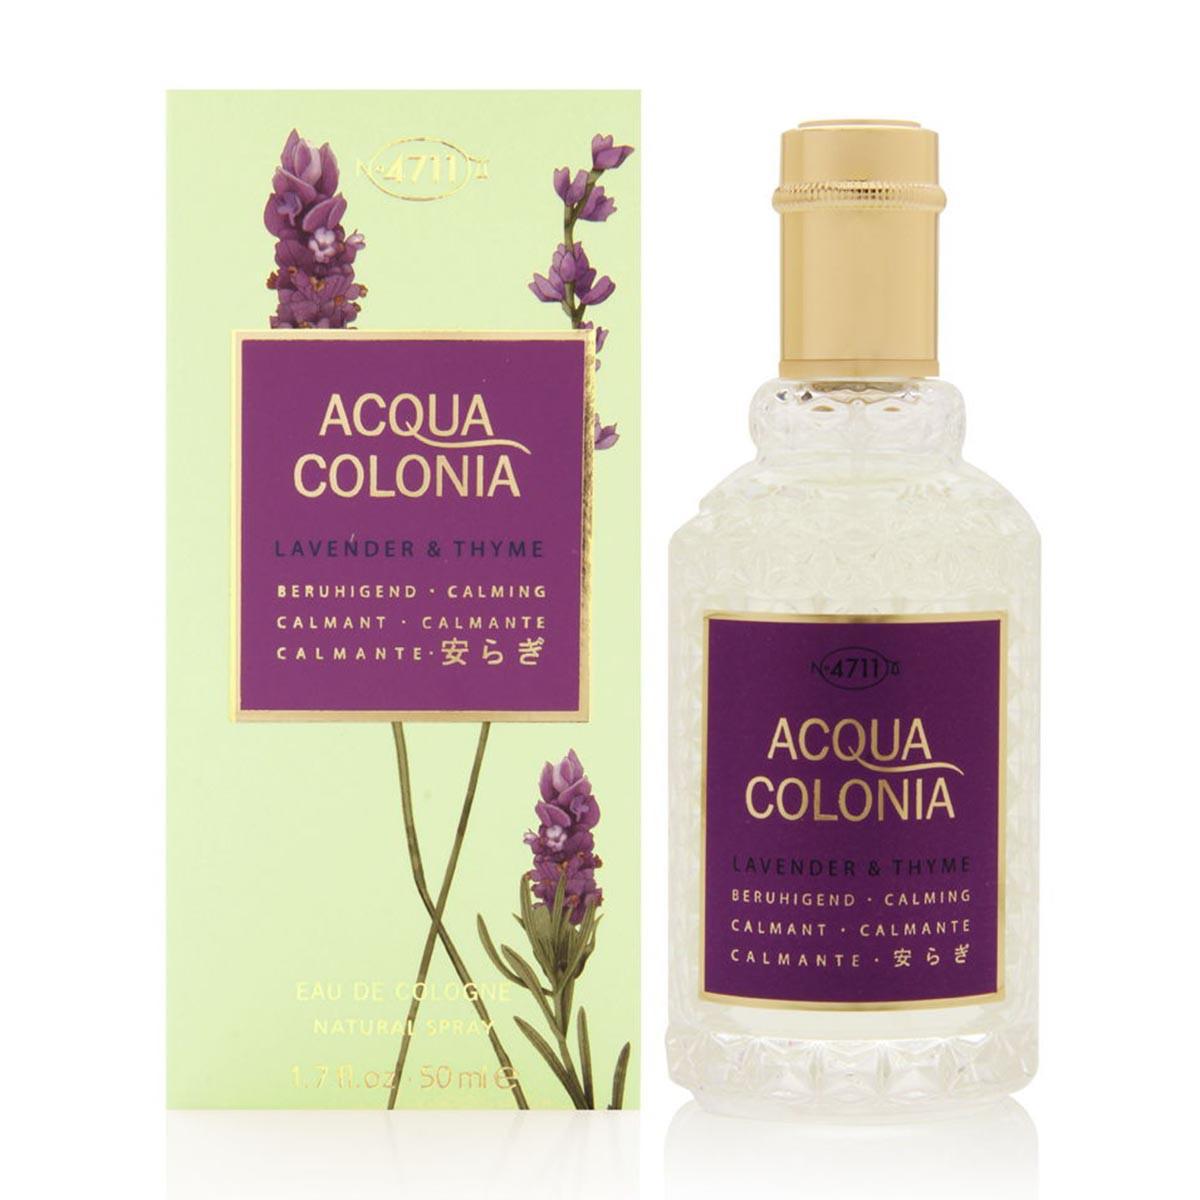 4711-fragrances-acqua-colonia-lavender-thyme-natural-spray-50ml-eau-de-cologne